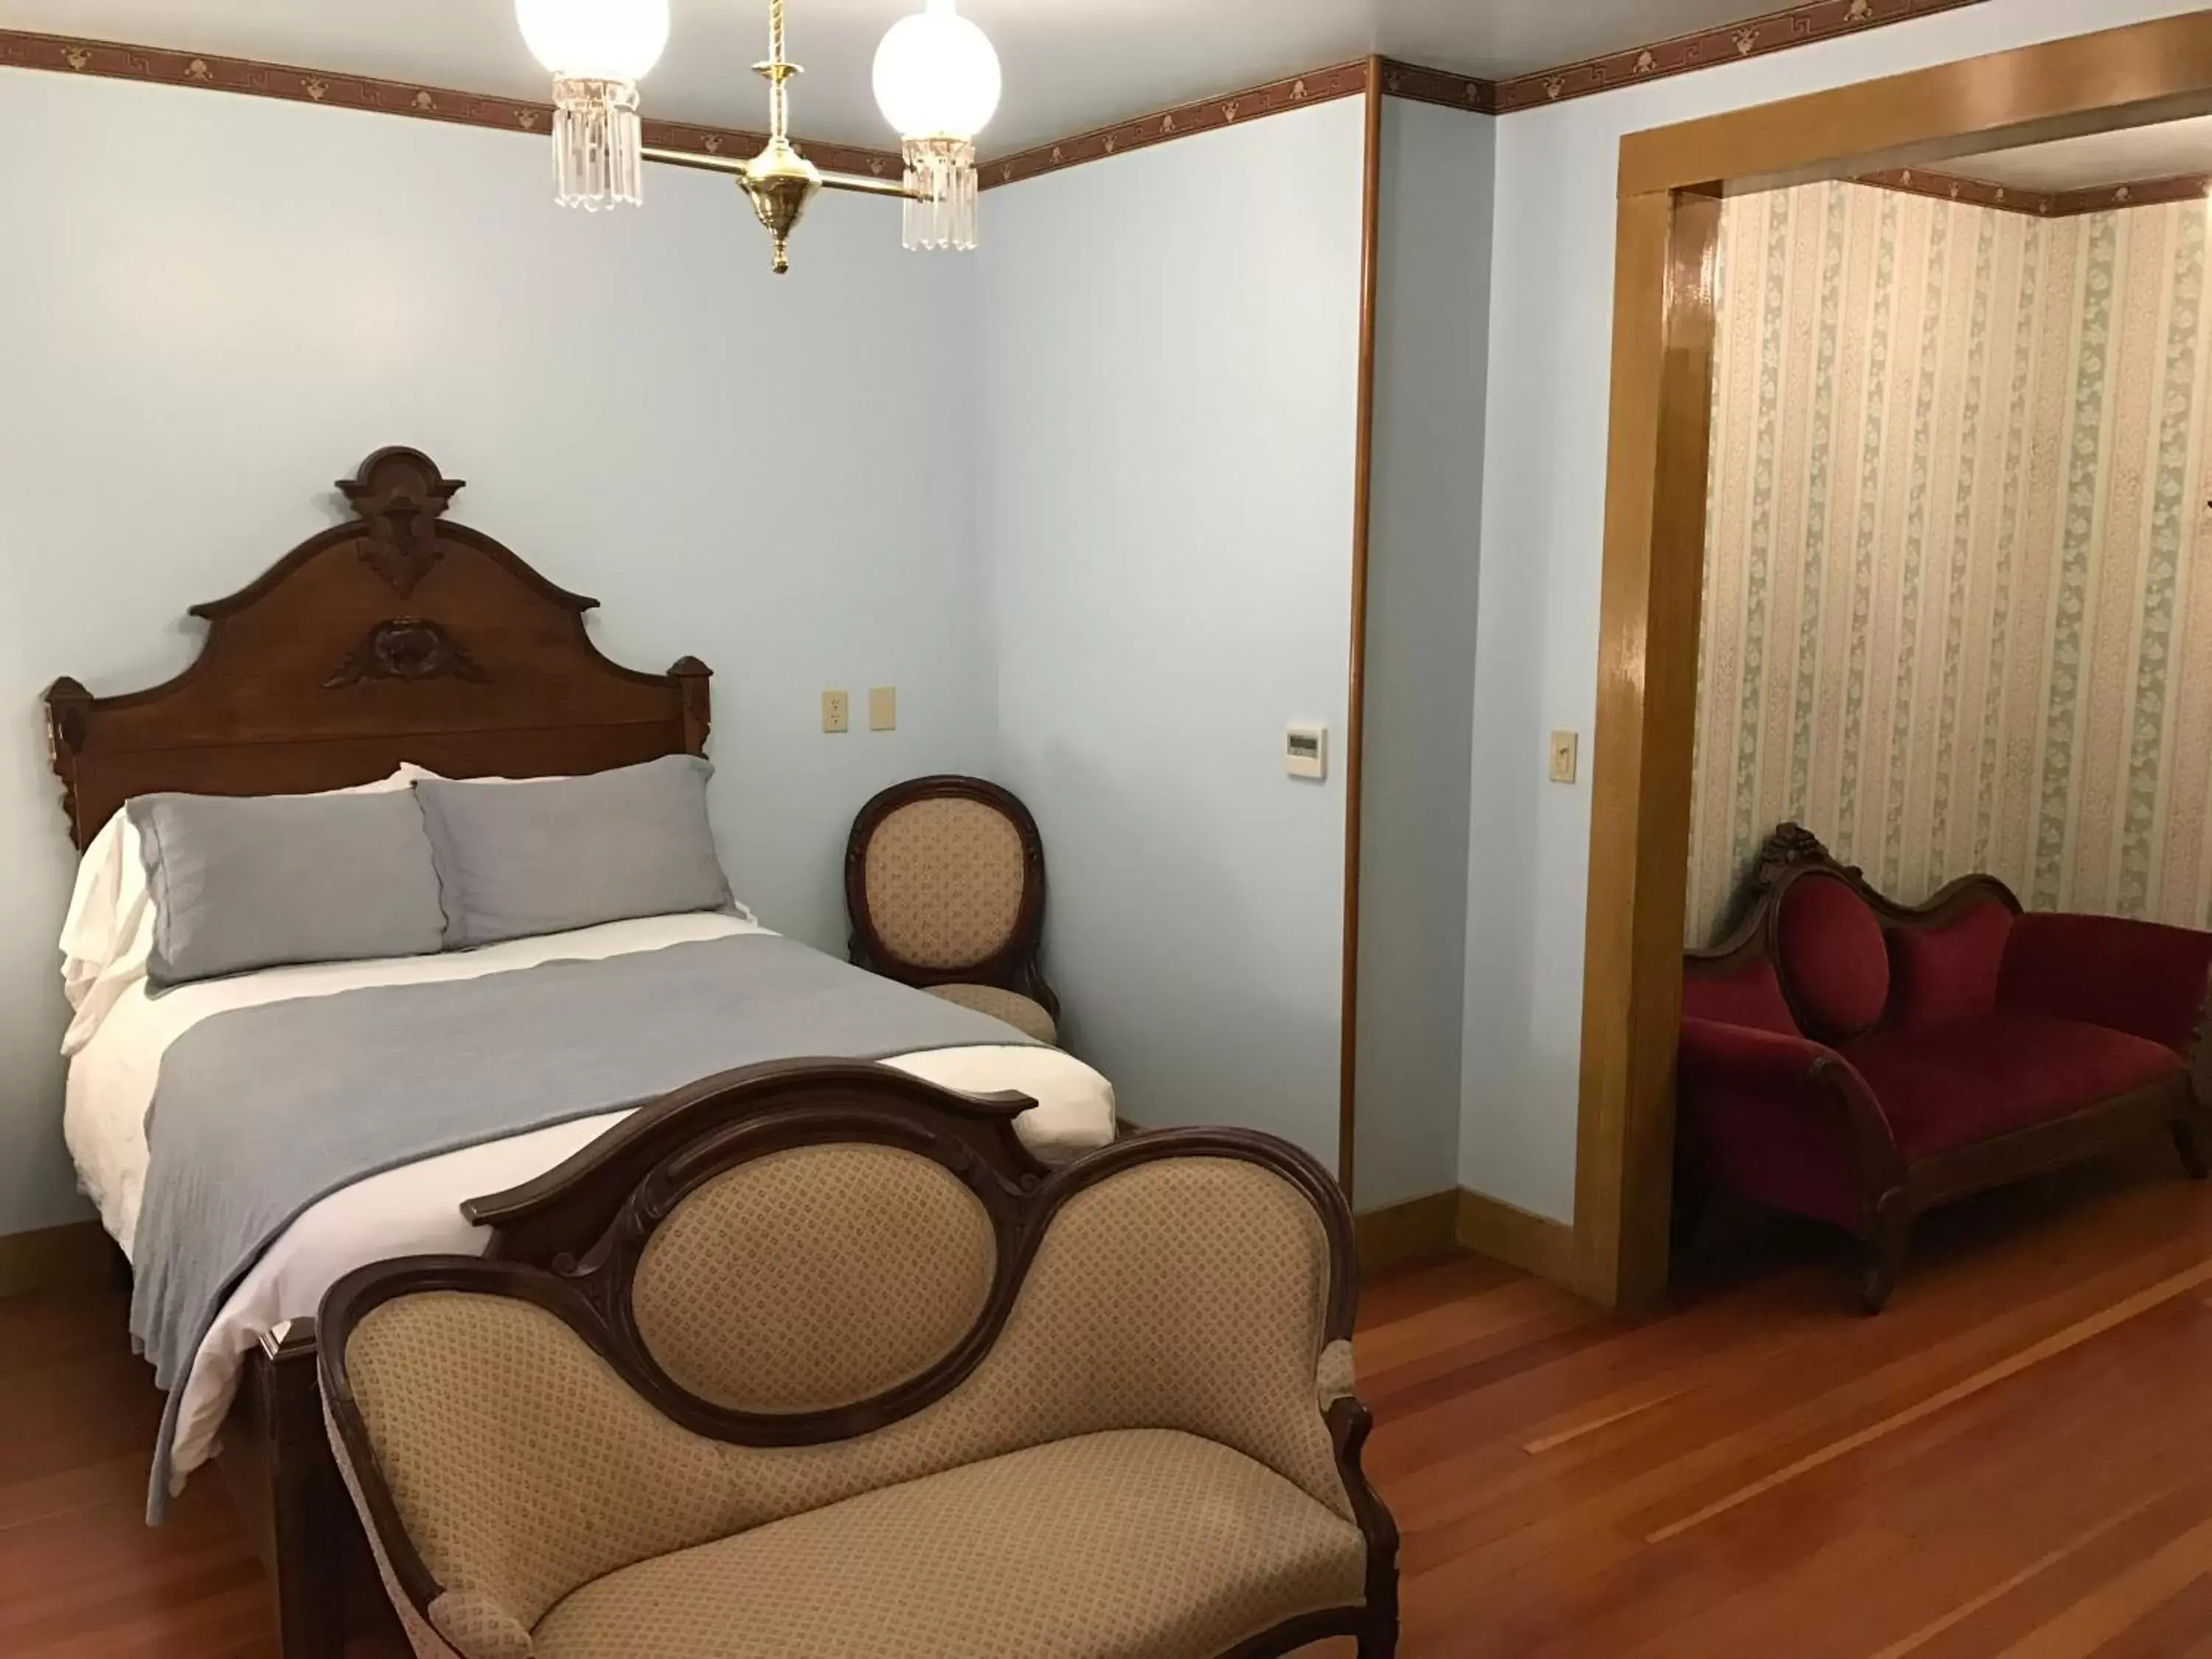 Bedroom, Room Photo in Cosmopolitan Hotel